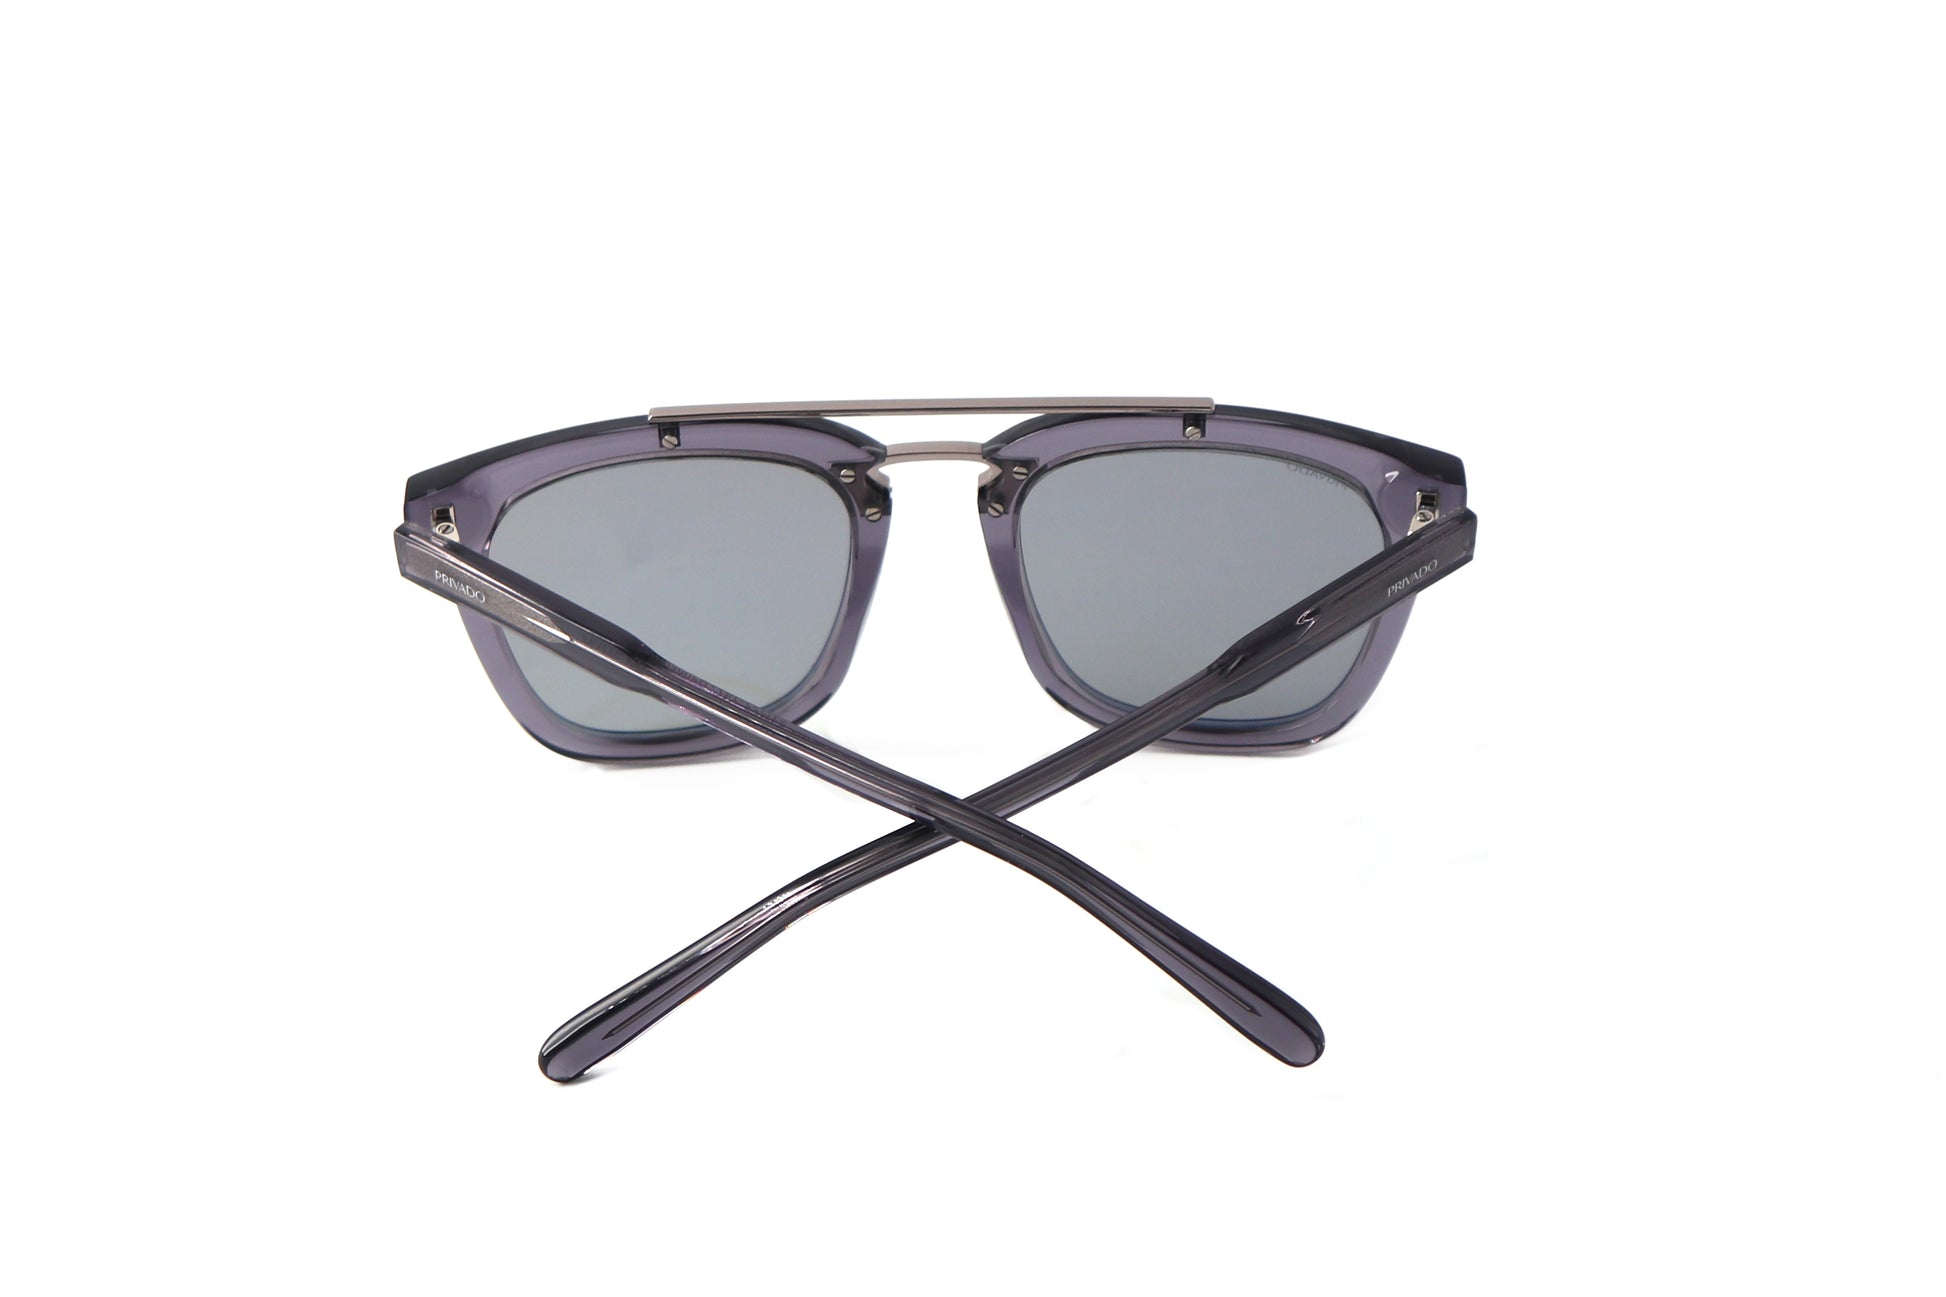 Privado Classic Sunglasses | Virtual Try-On | Privado Eyewear Black / Acetate - Handcrafted Luxury Sunglass - UV400 Protection & Polarized, Scratch